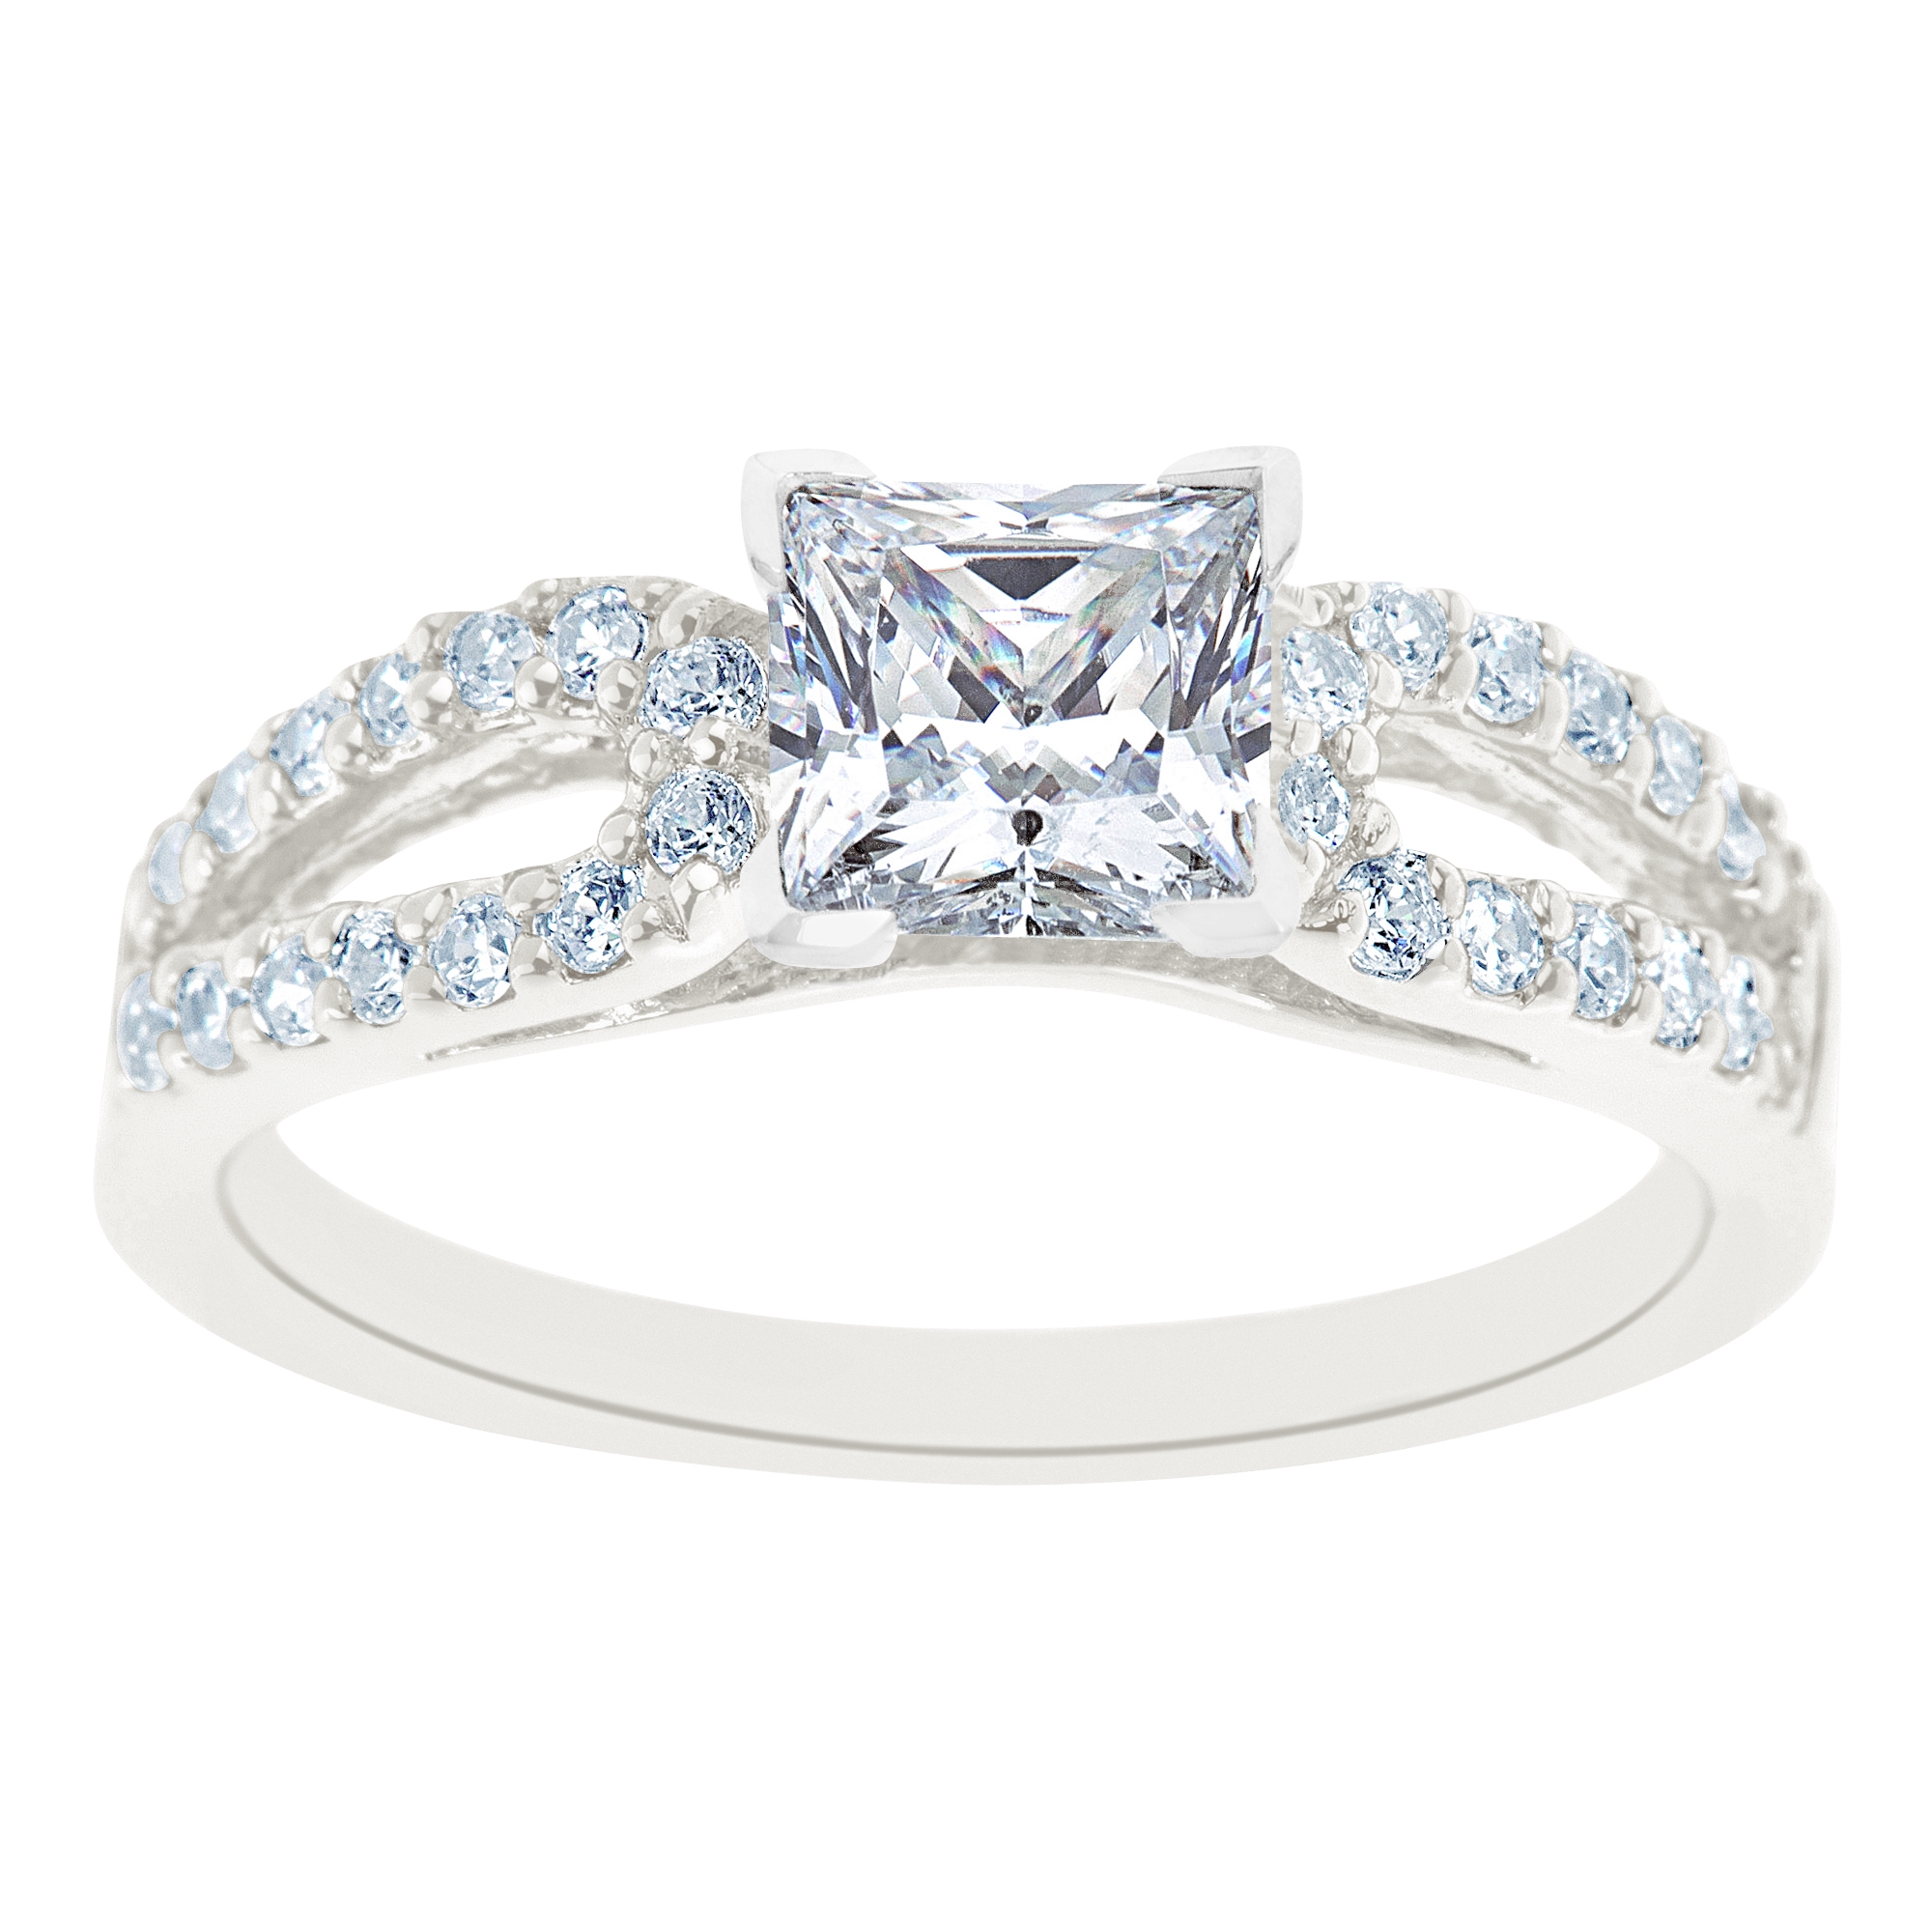 New York City Diamond District 14K White Gold Curved Split Shank Princess Cut Certified Diamond Engagement Ring